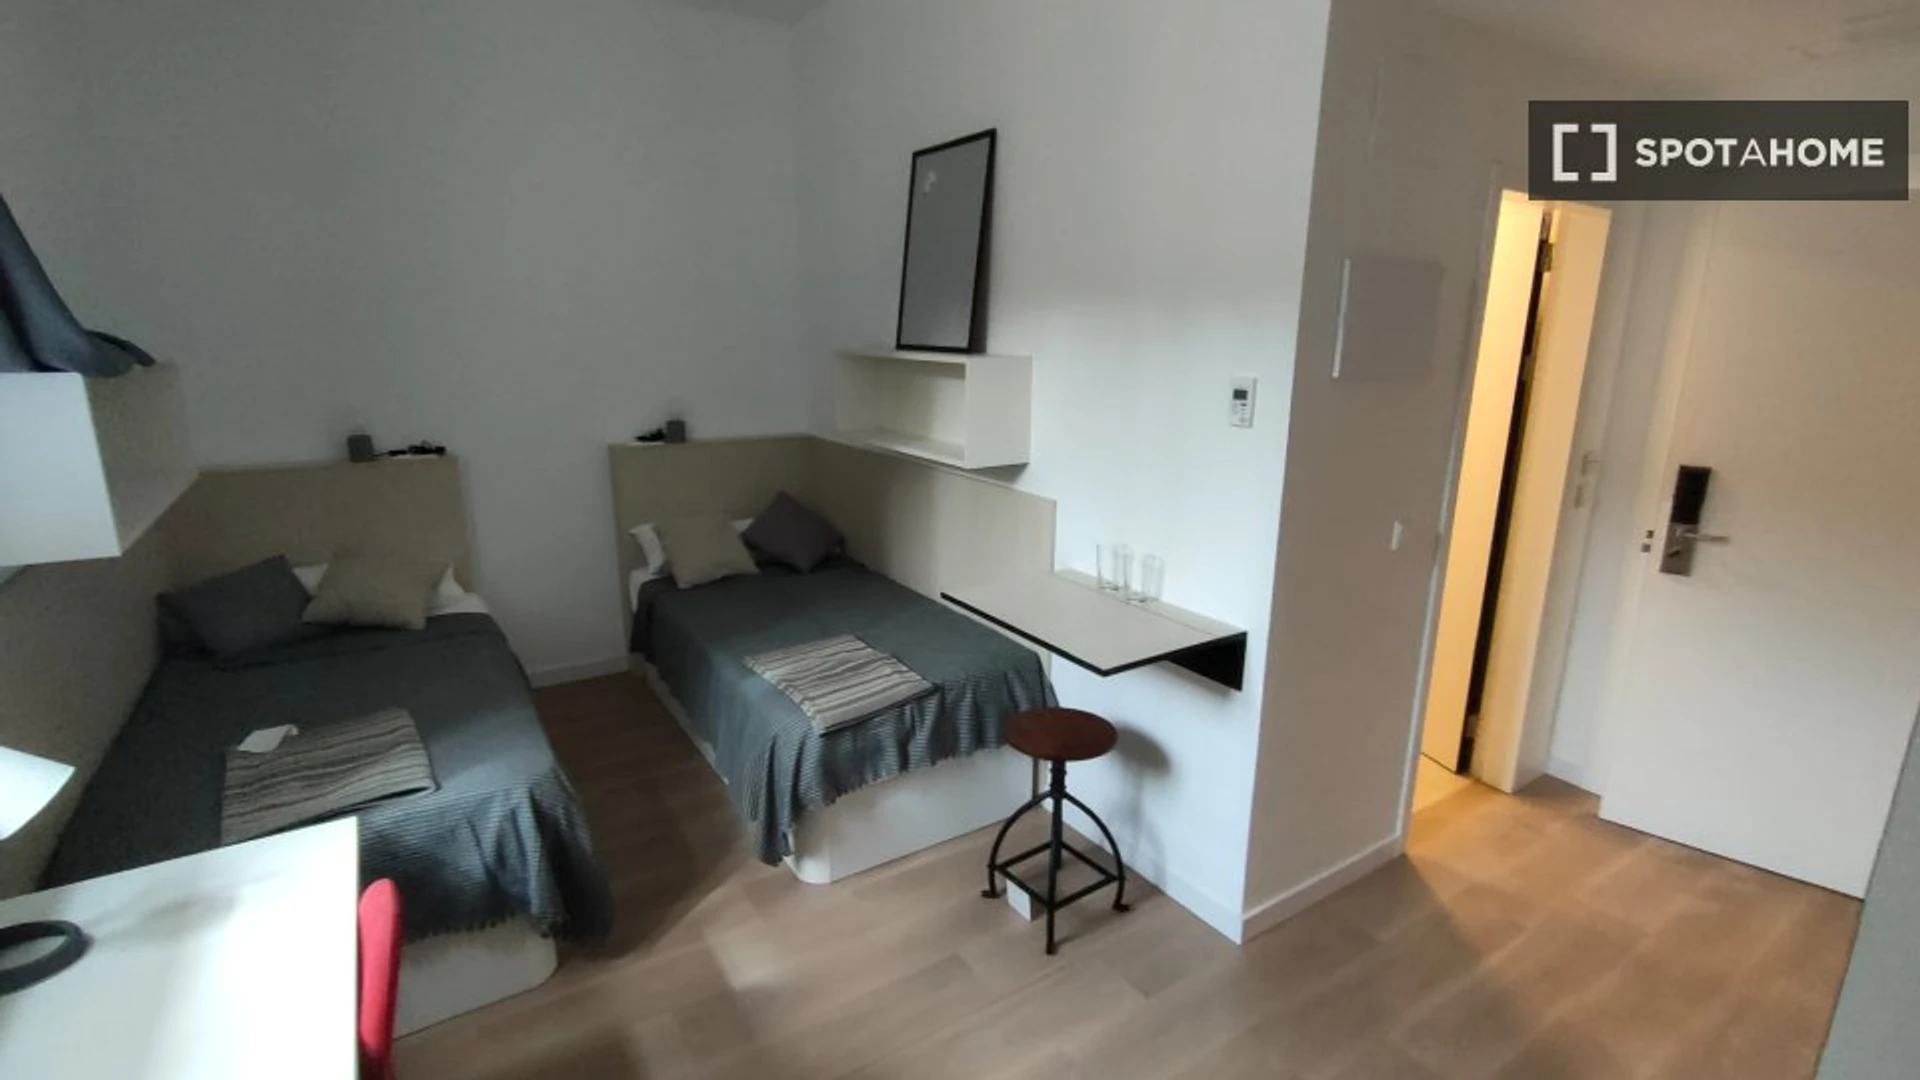 Habitación privada barata en Zaragoza